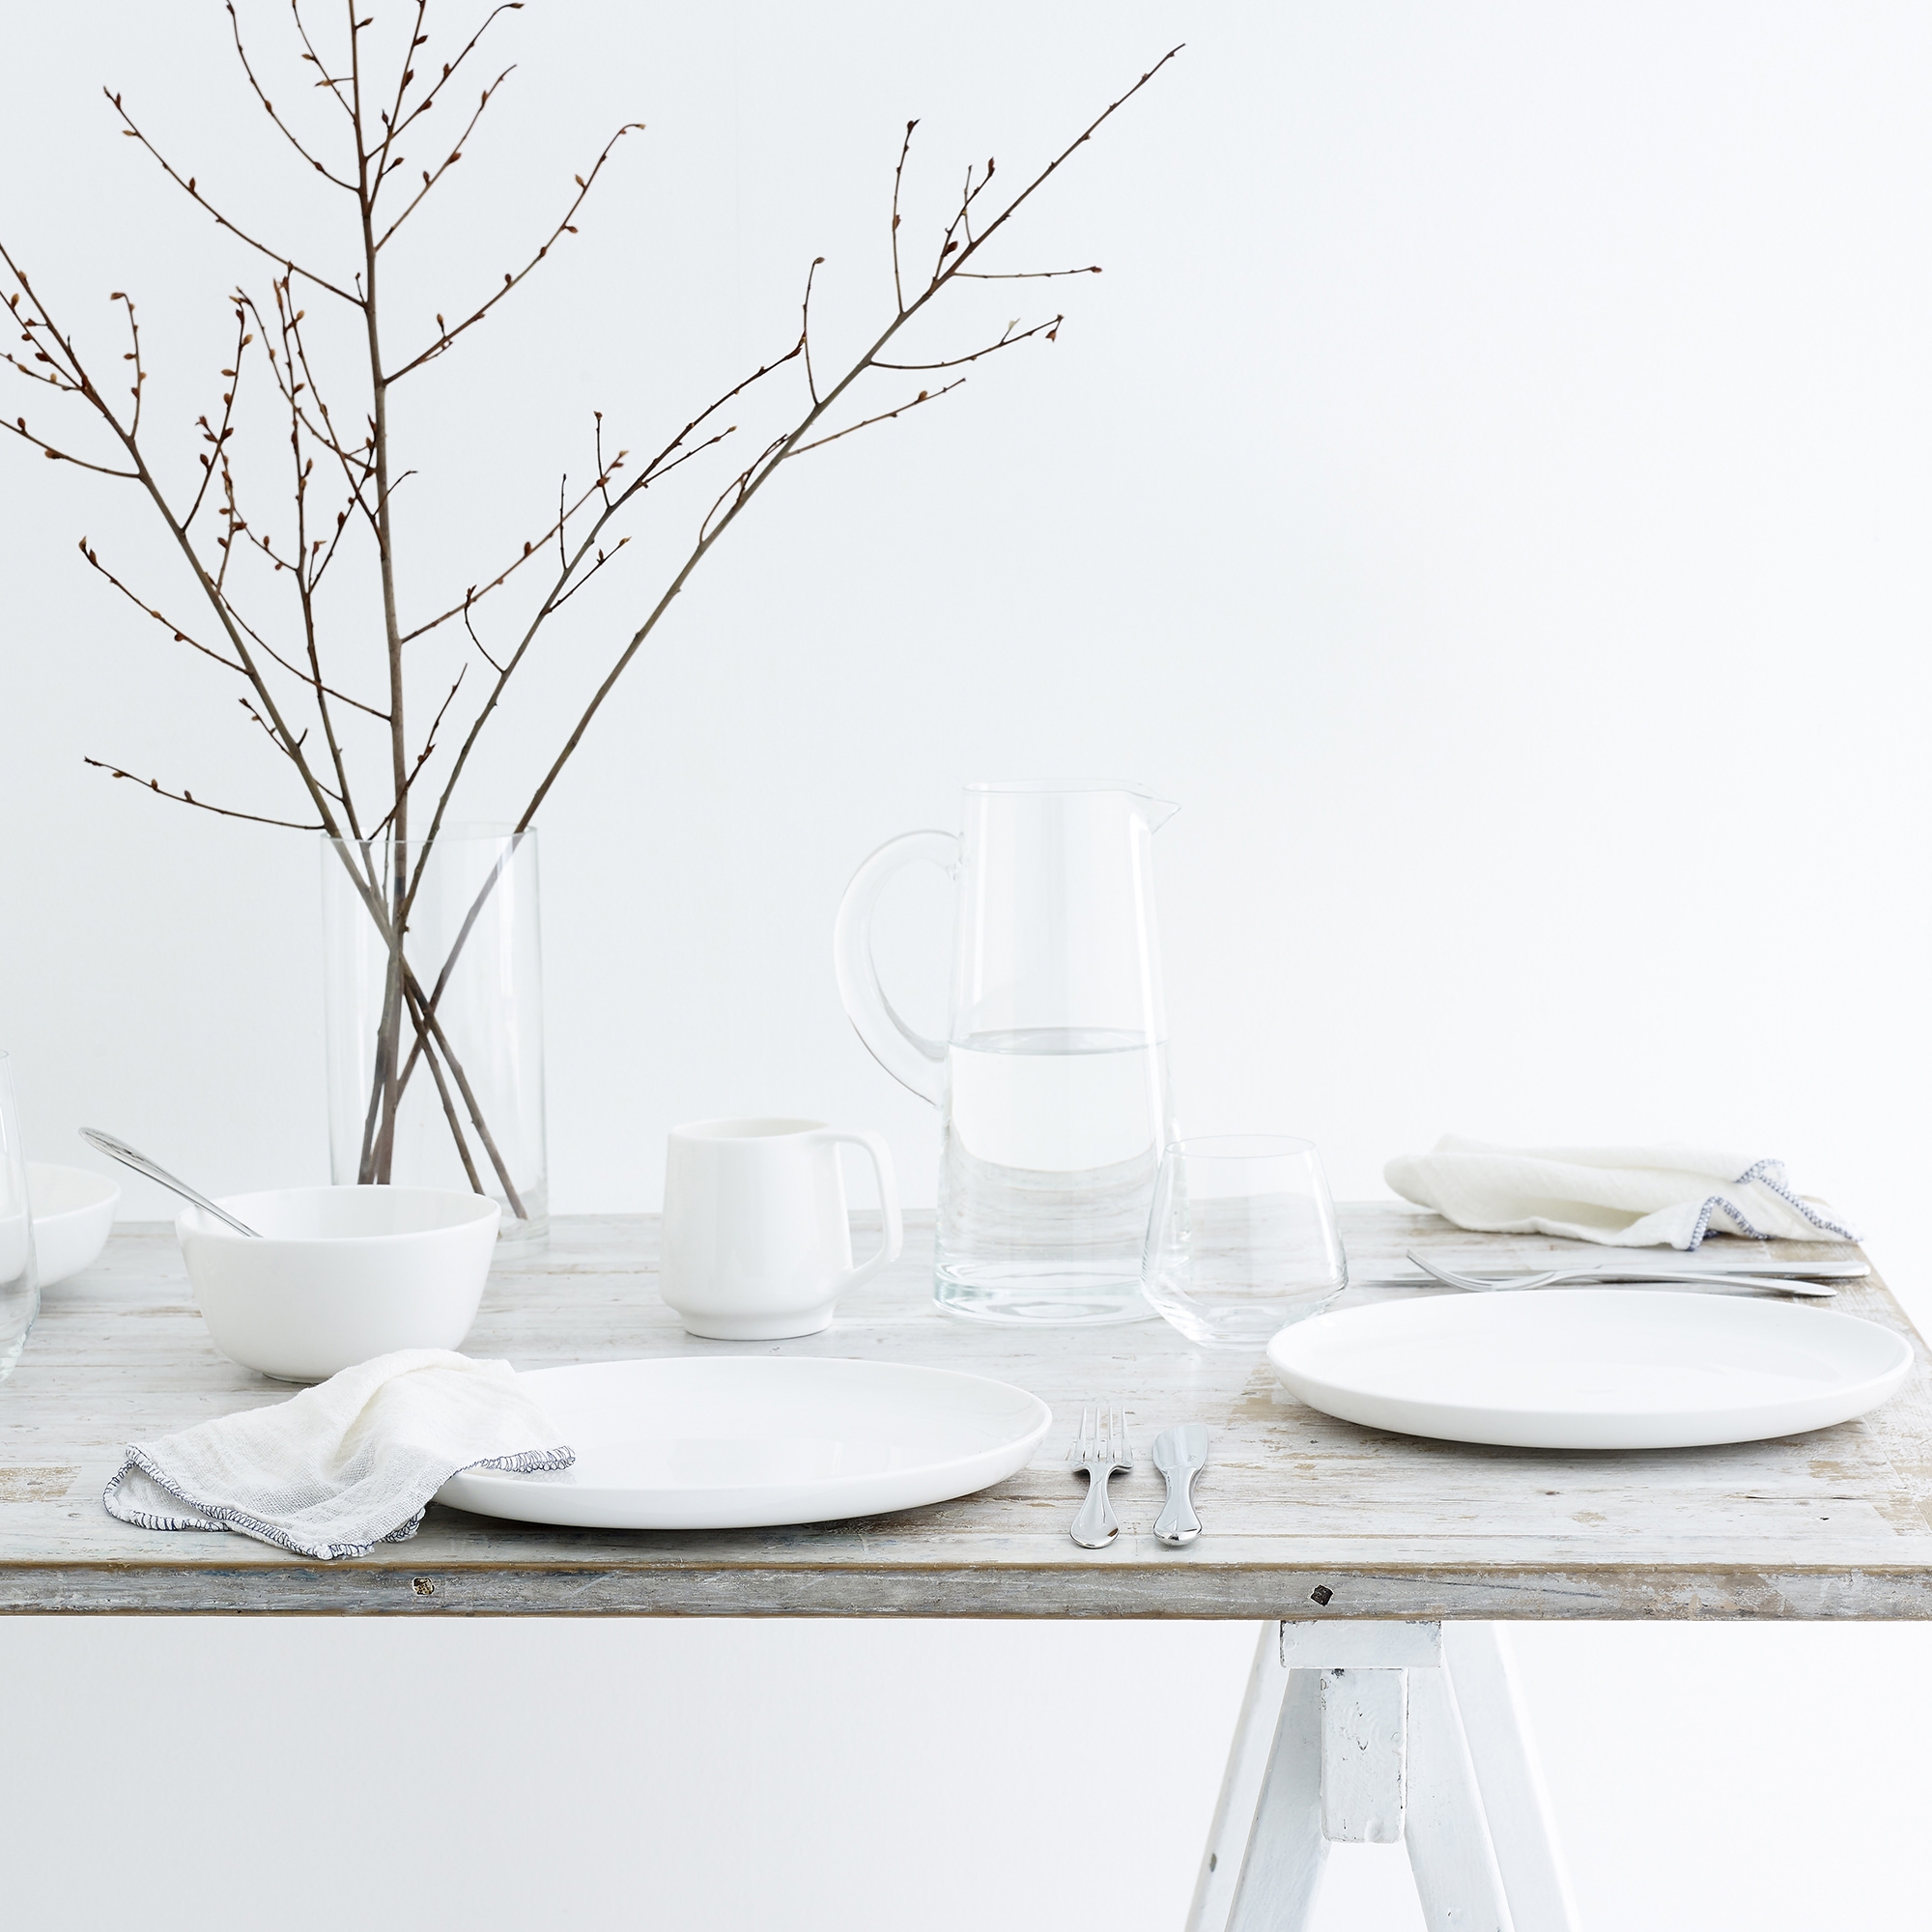 Noritake Marc Newson Dinner Plate Set of 4 White Image 2